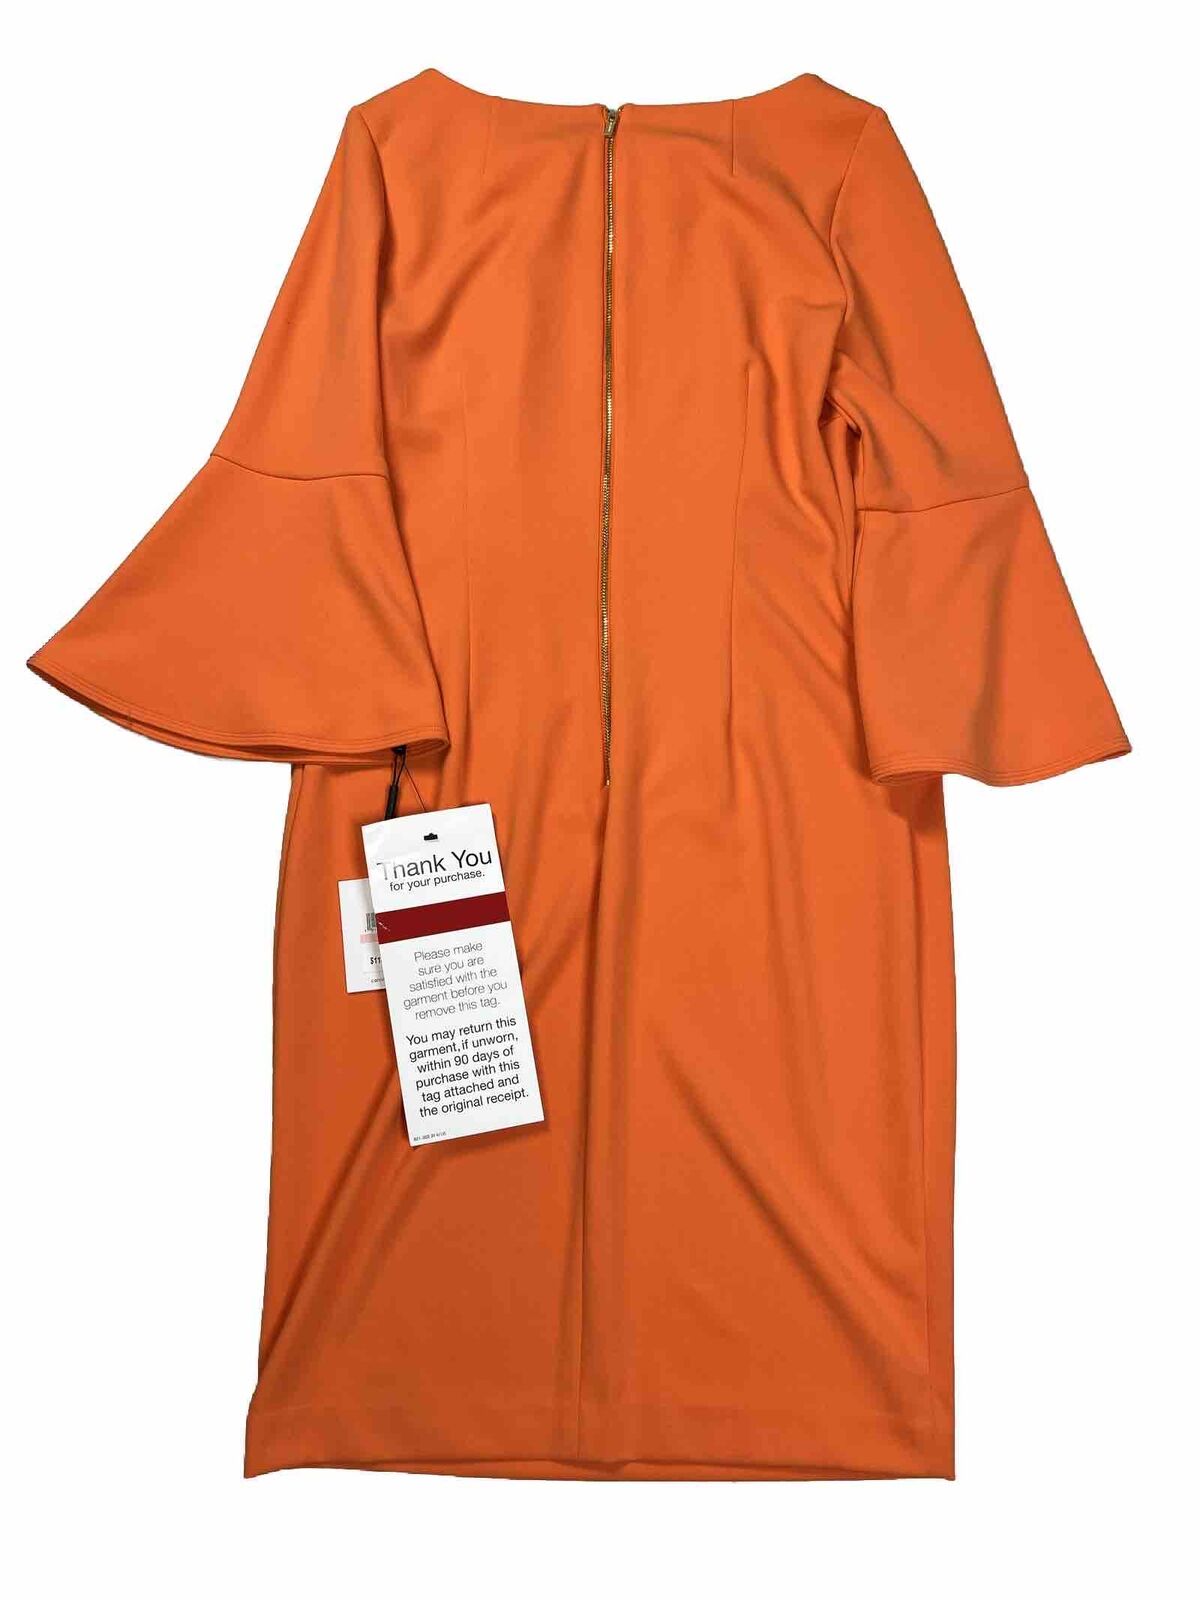 NEW Calvin Klein Women's Orange Bell Sleeve Sheath Dress - 10